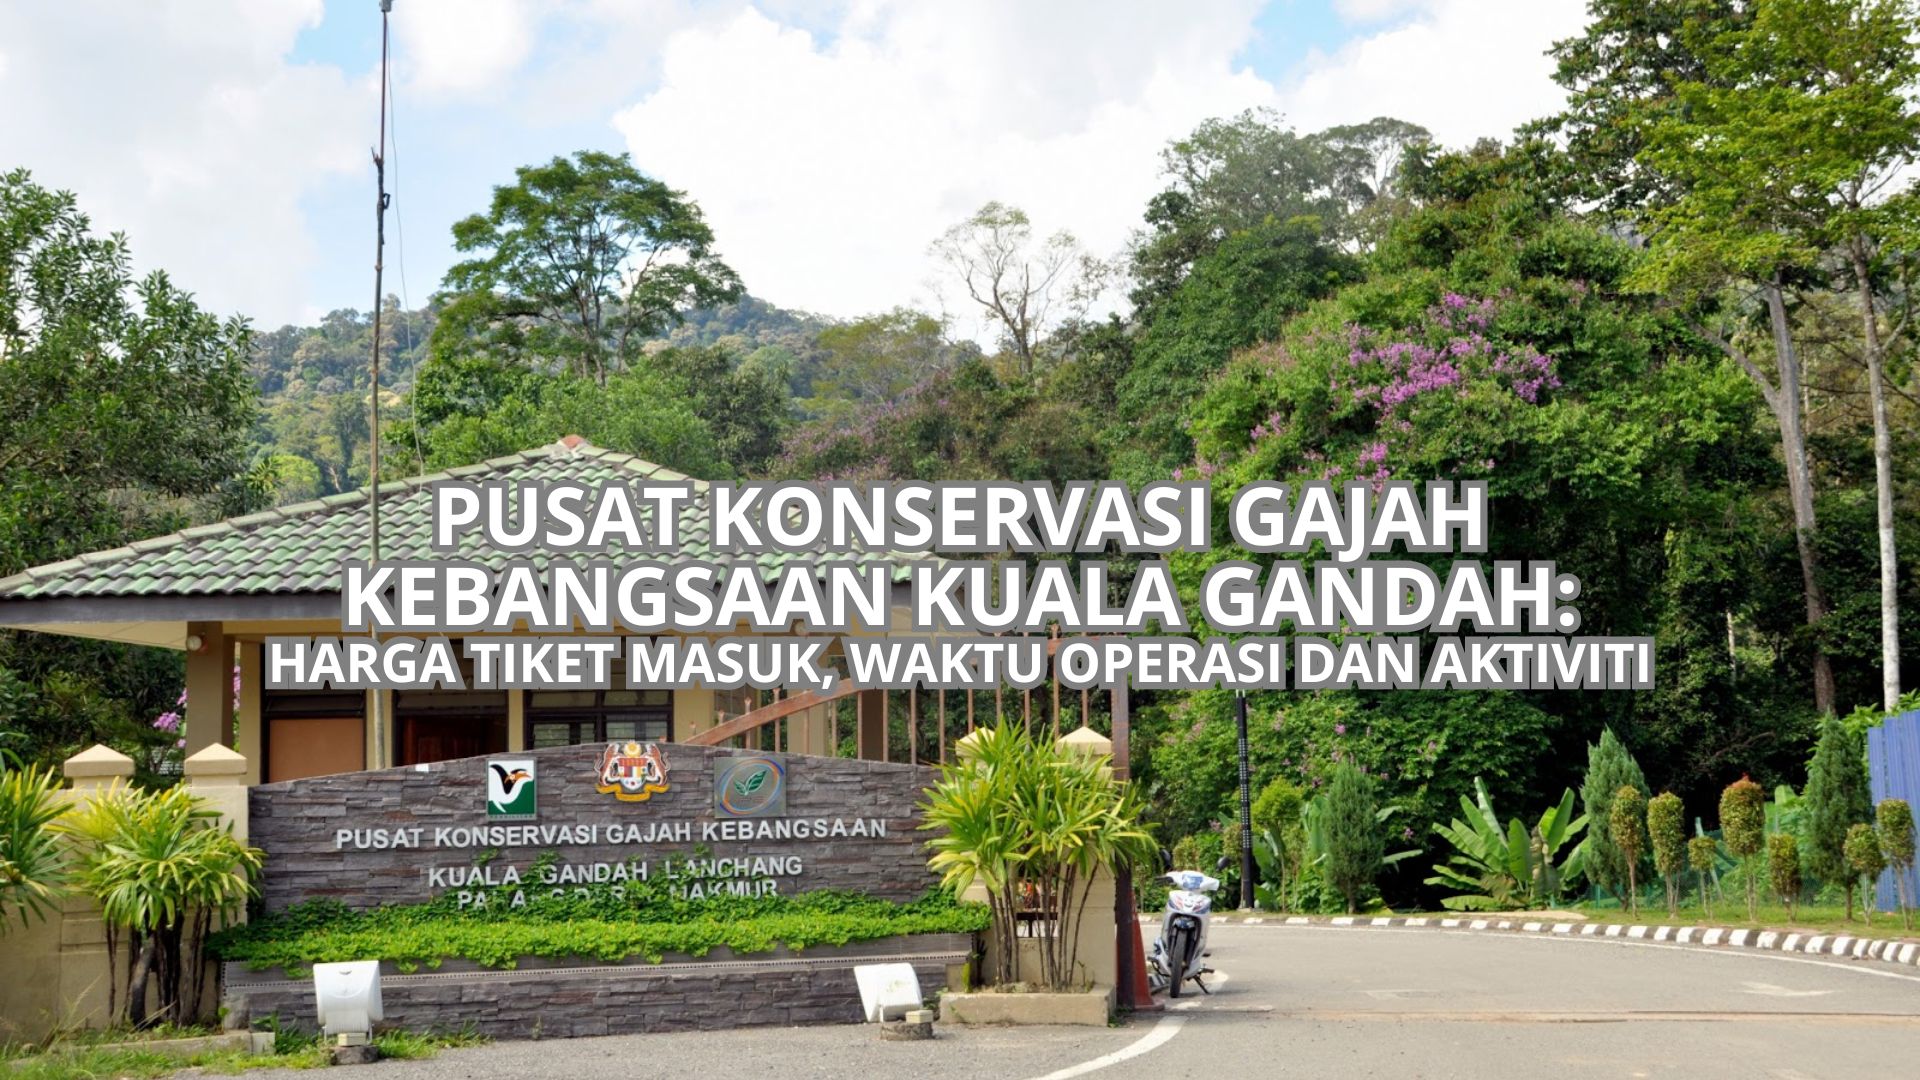 Pusat Konservasi Gajah Kebangsaan Kuala Gandah Cover